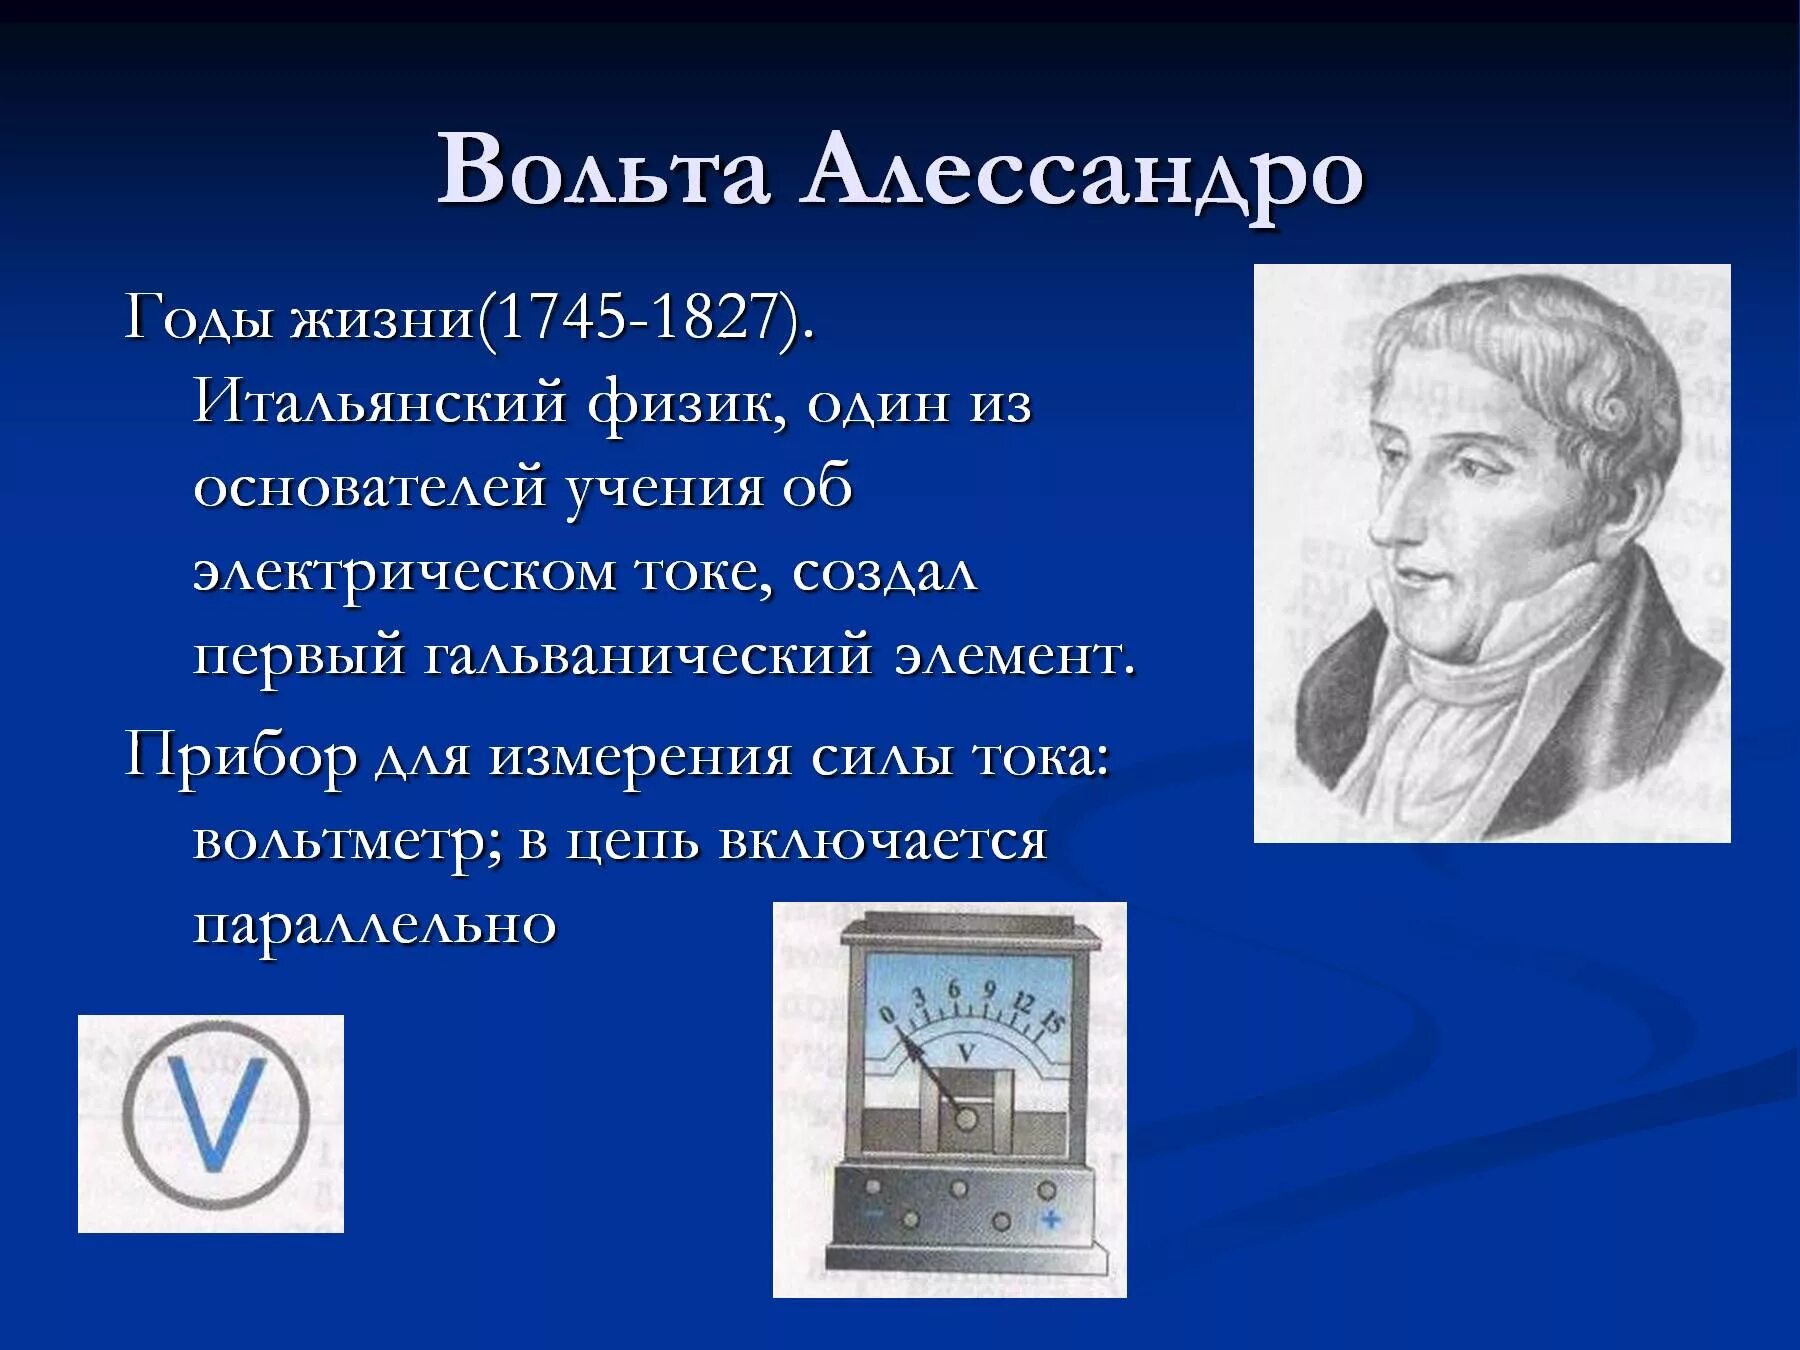 Алессандро вольта физики. Алессандро вольта физики открытия в физике. Алессандро вольта (1745 - 1827). Алессандро вольта открытия. Физик давший силу току